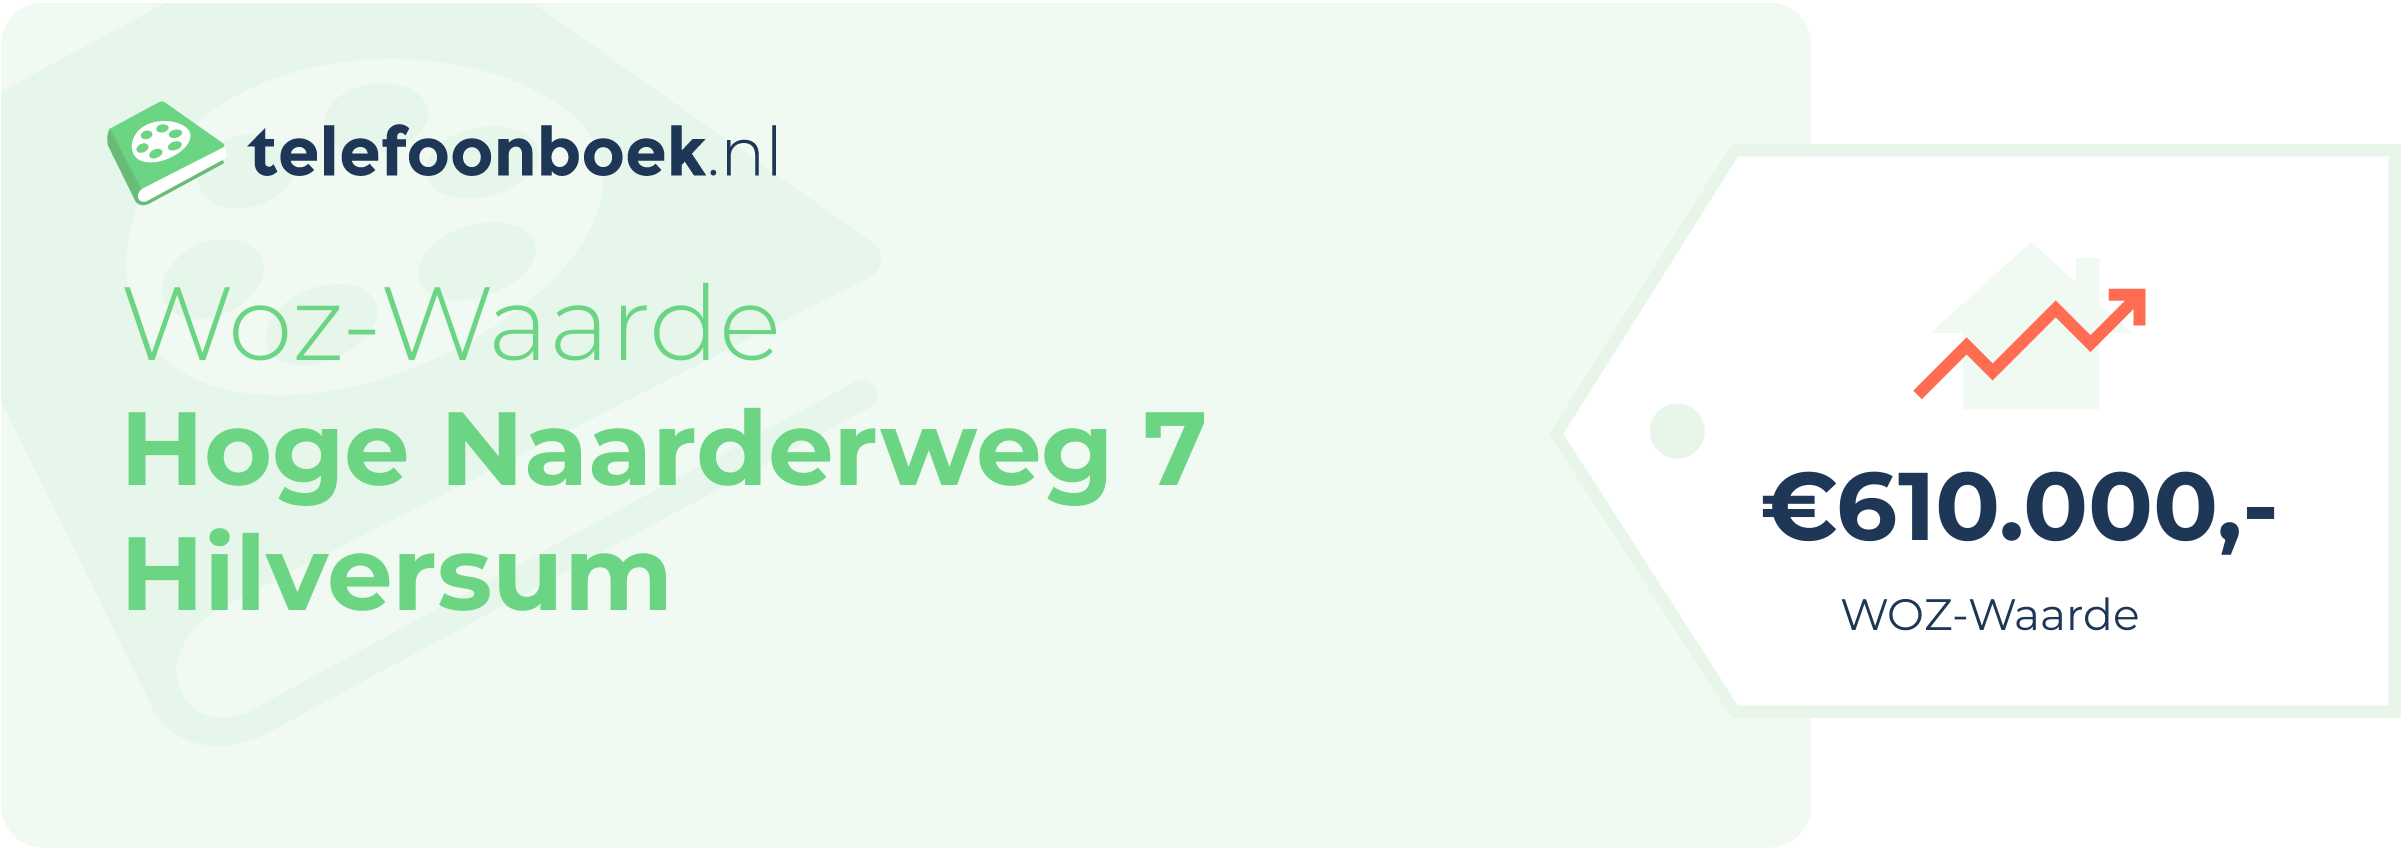 WOZ-waarde Hoge Naarderweg 7 Hilversum